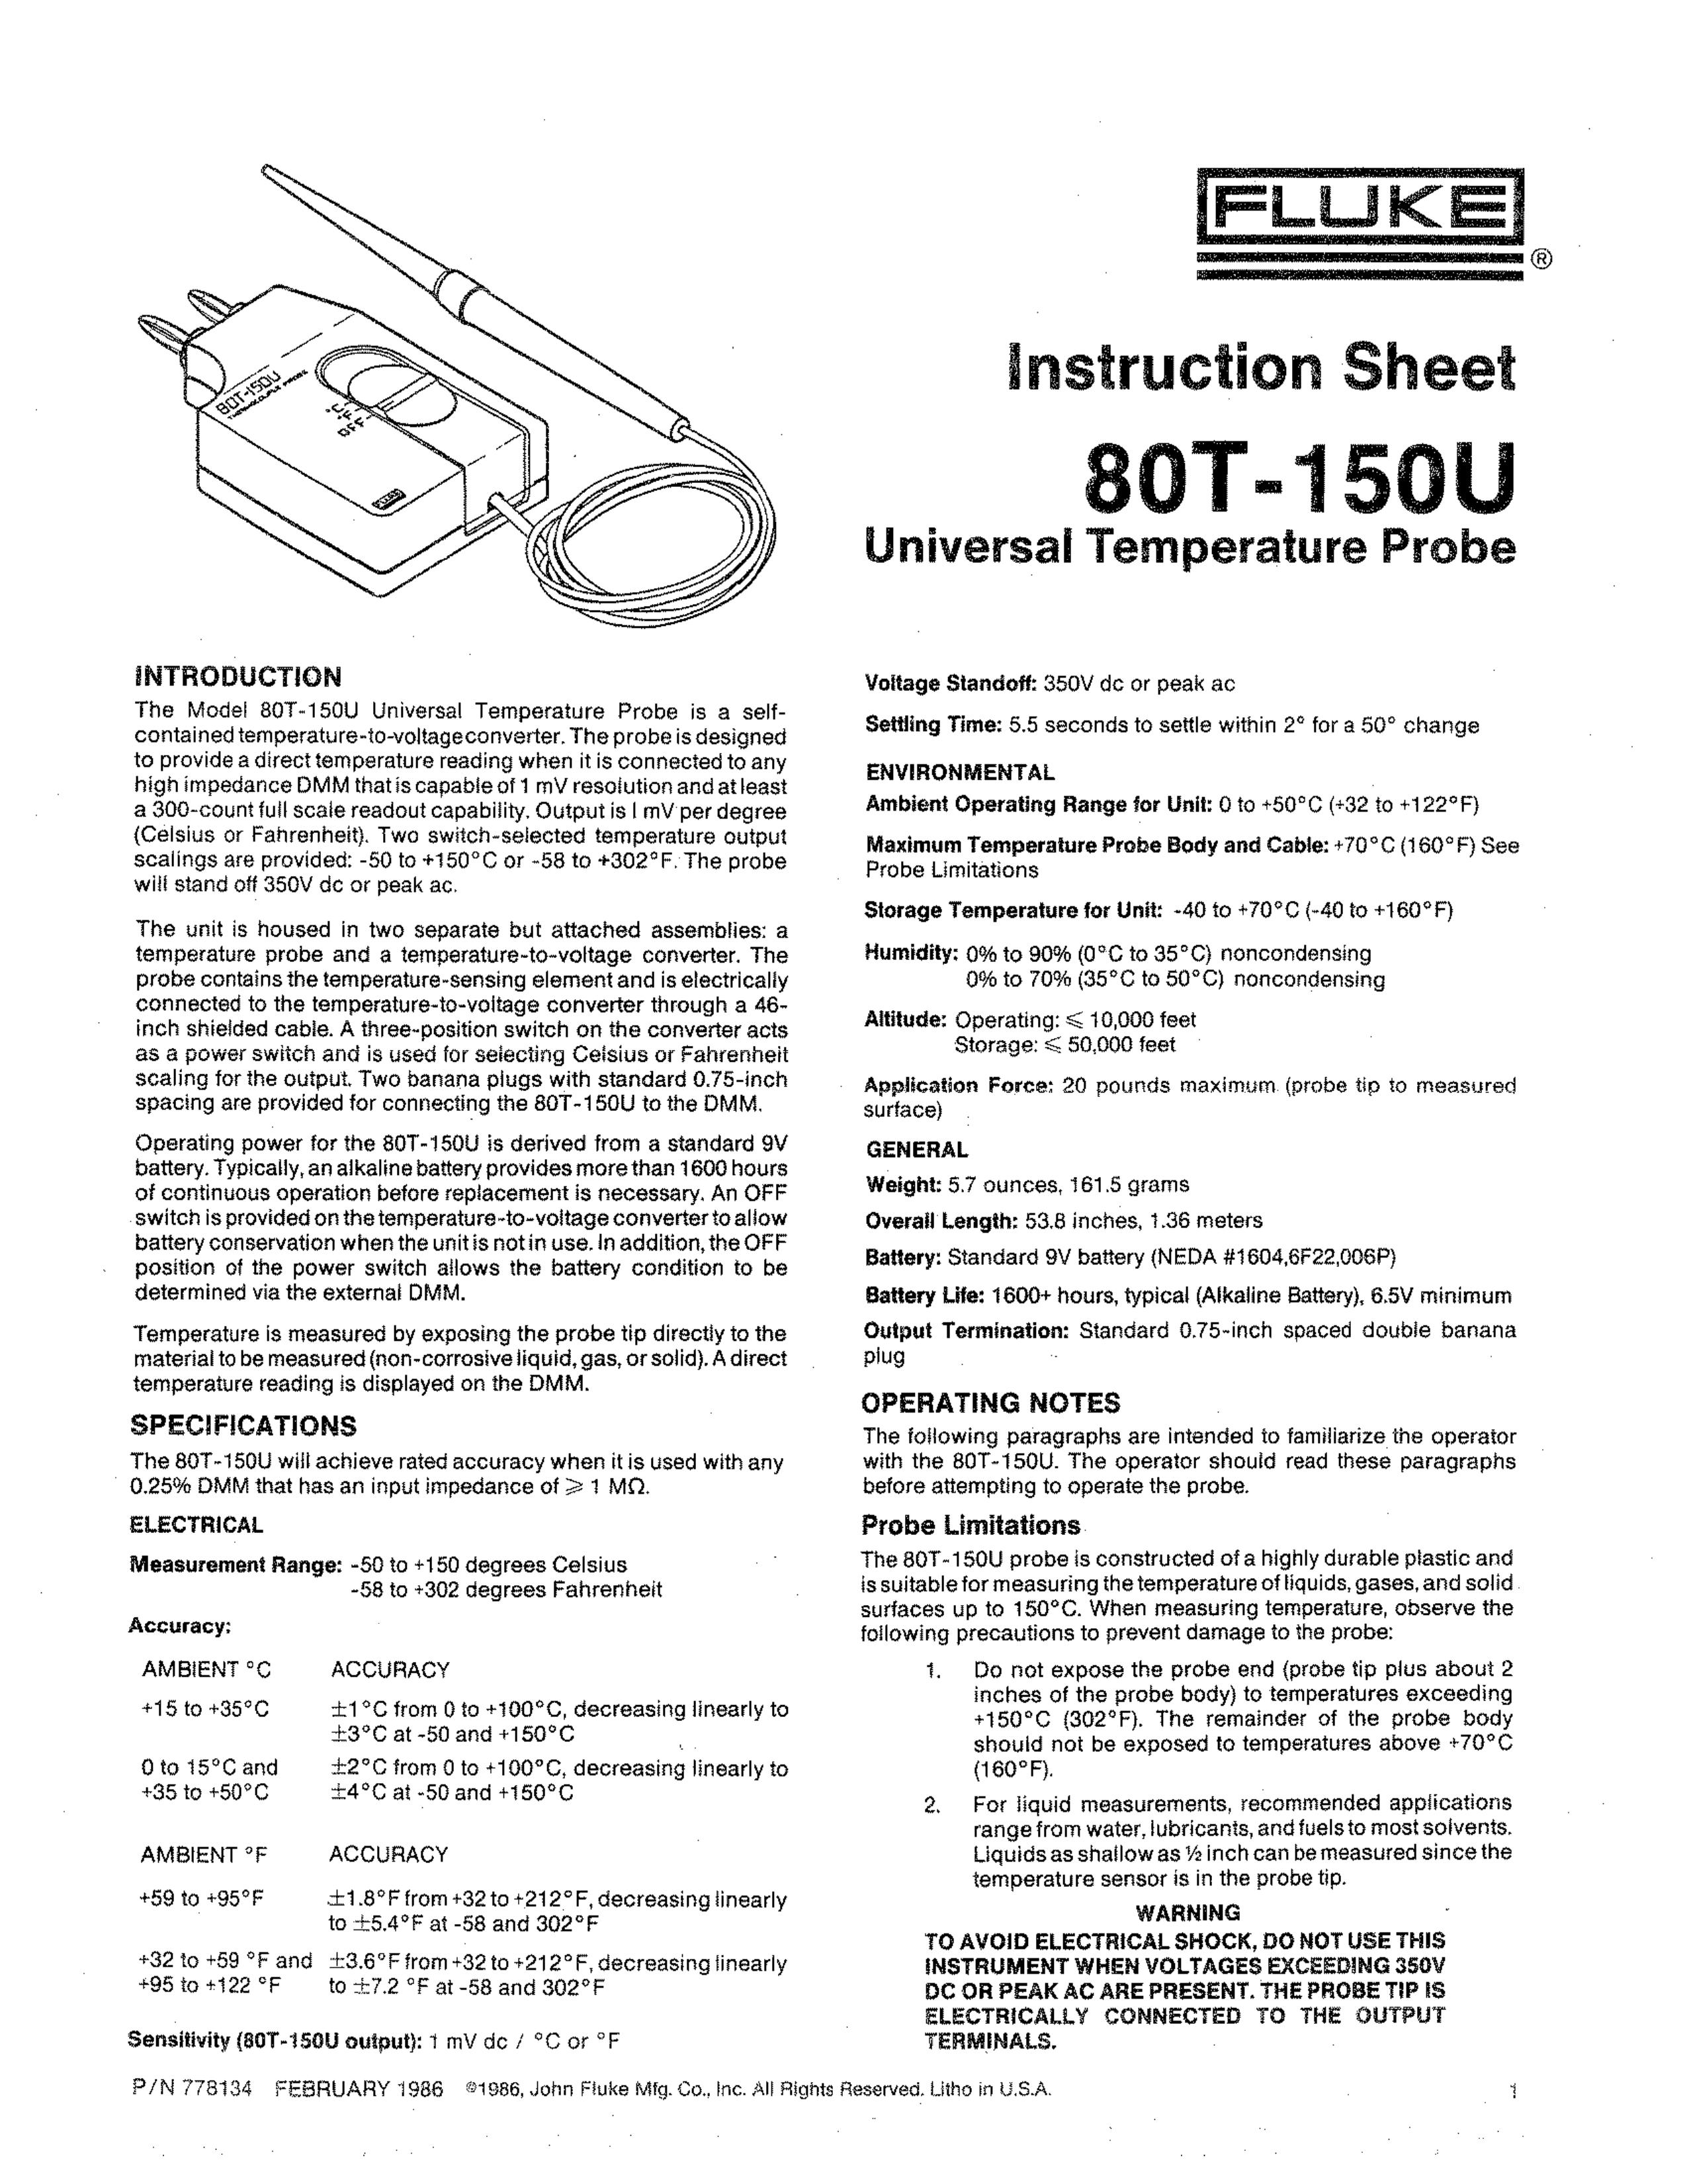 Fluke 80t-150u Thermometer User Manual